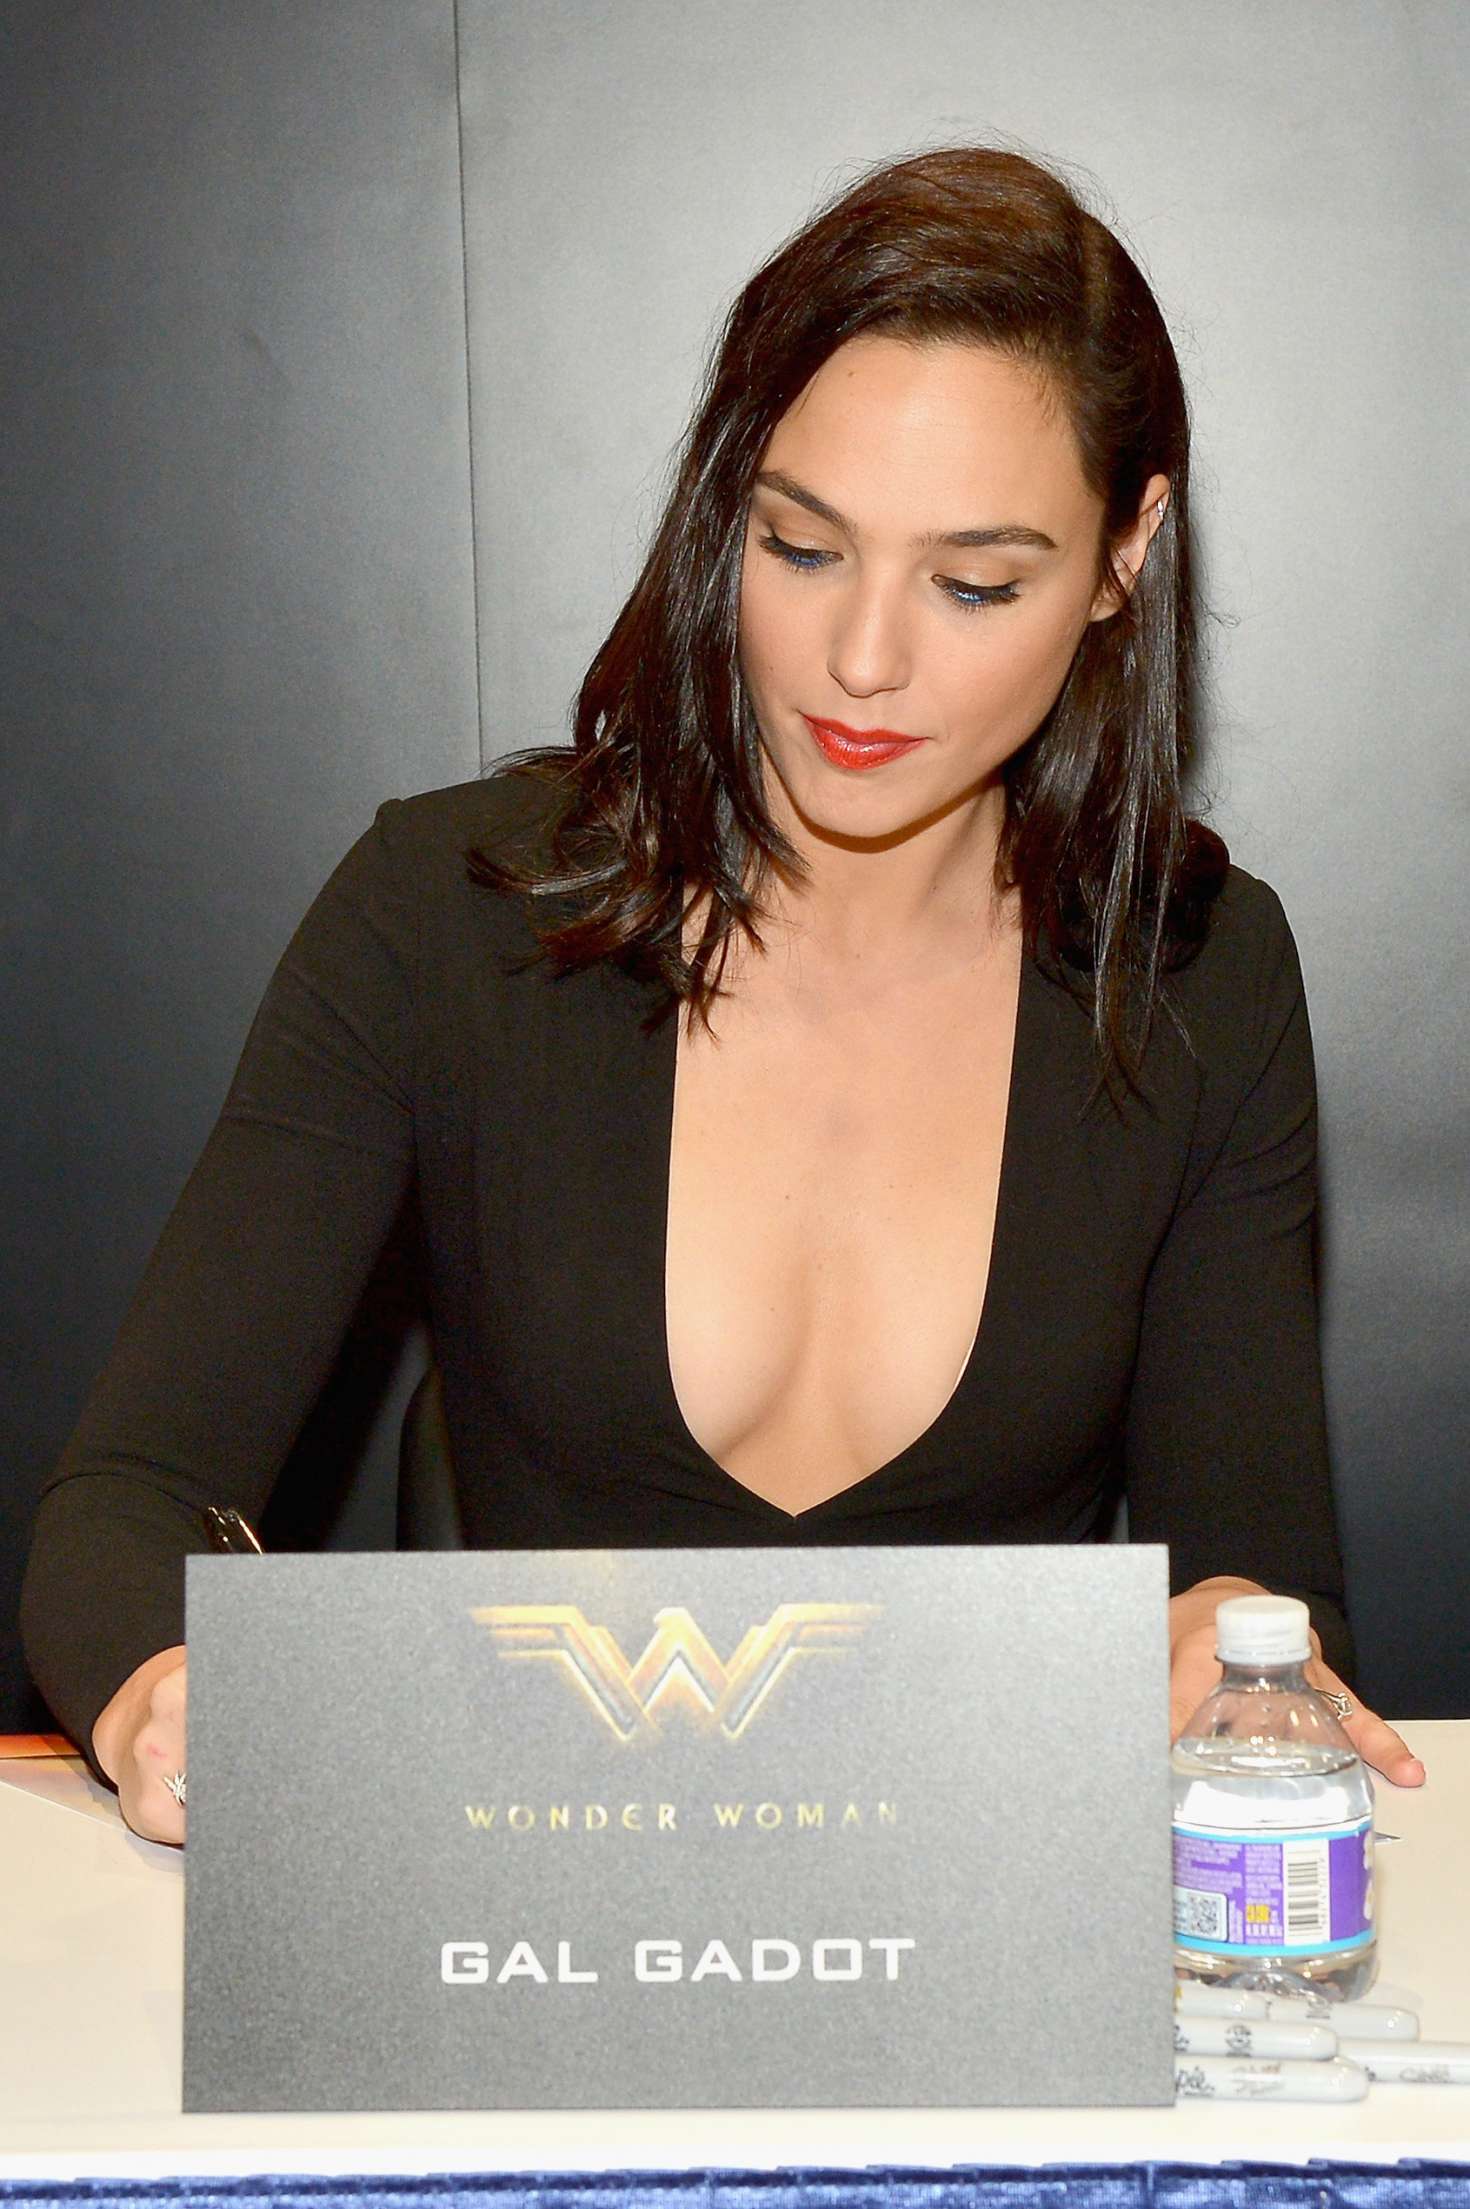 Gal Gadot 2016 : Gal Gadot: Wonder Woman Autograph Signing at Comic-Con 2016 -02